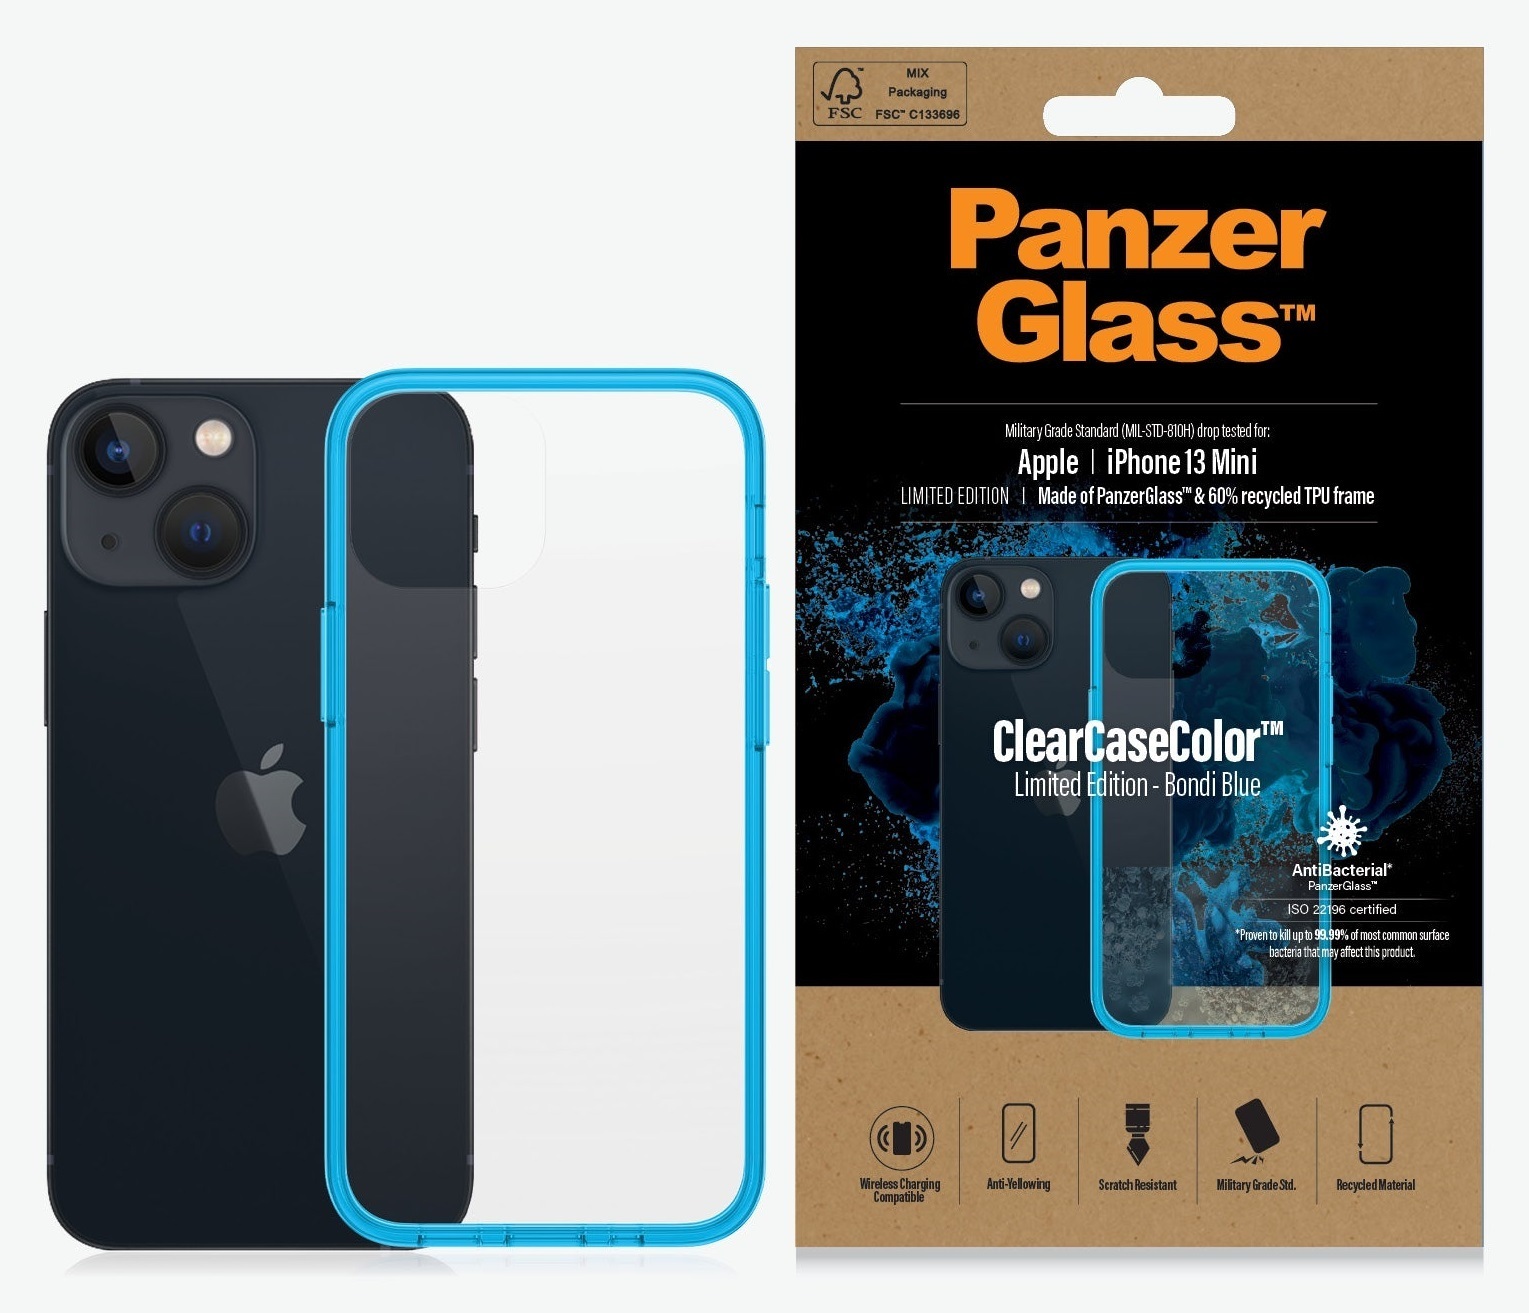 PanzerGlass Apple iPhone 13 Mini ClearCase - Bondi Blue Limited Edition (0326), AntiBacterial, Military Grade Standard, Scratch Resistant